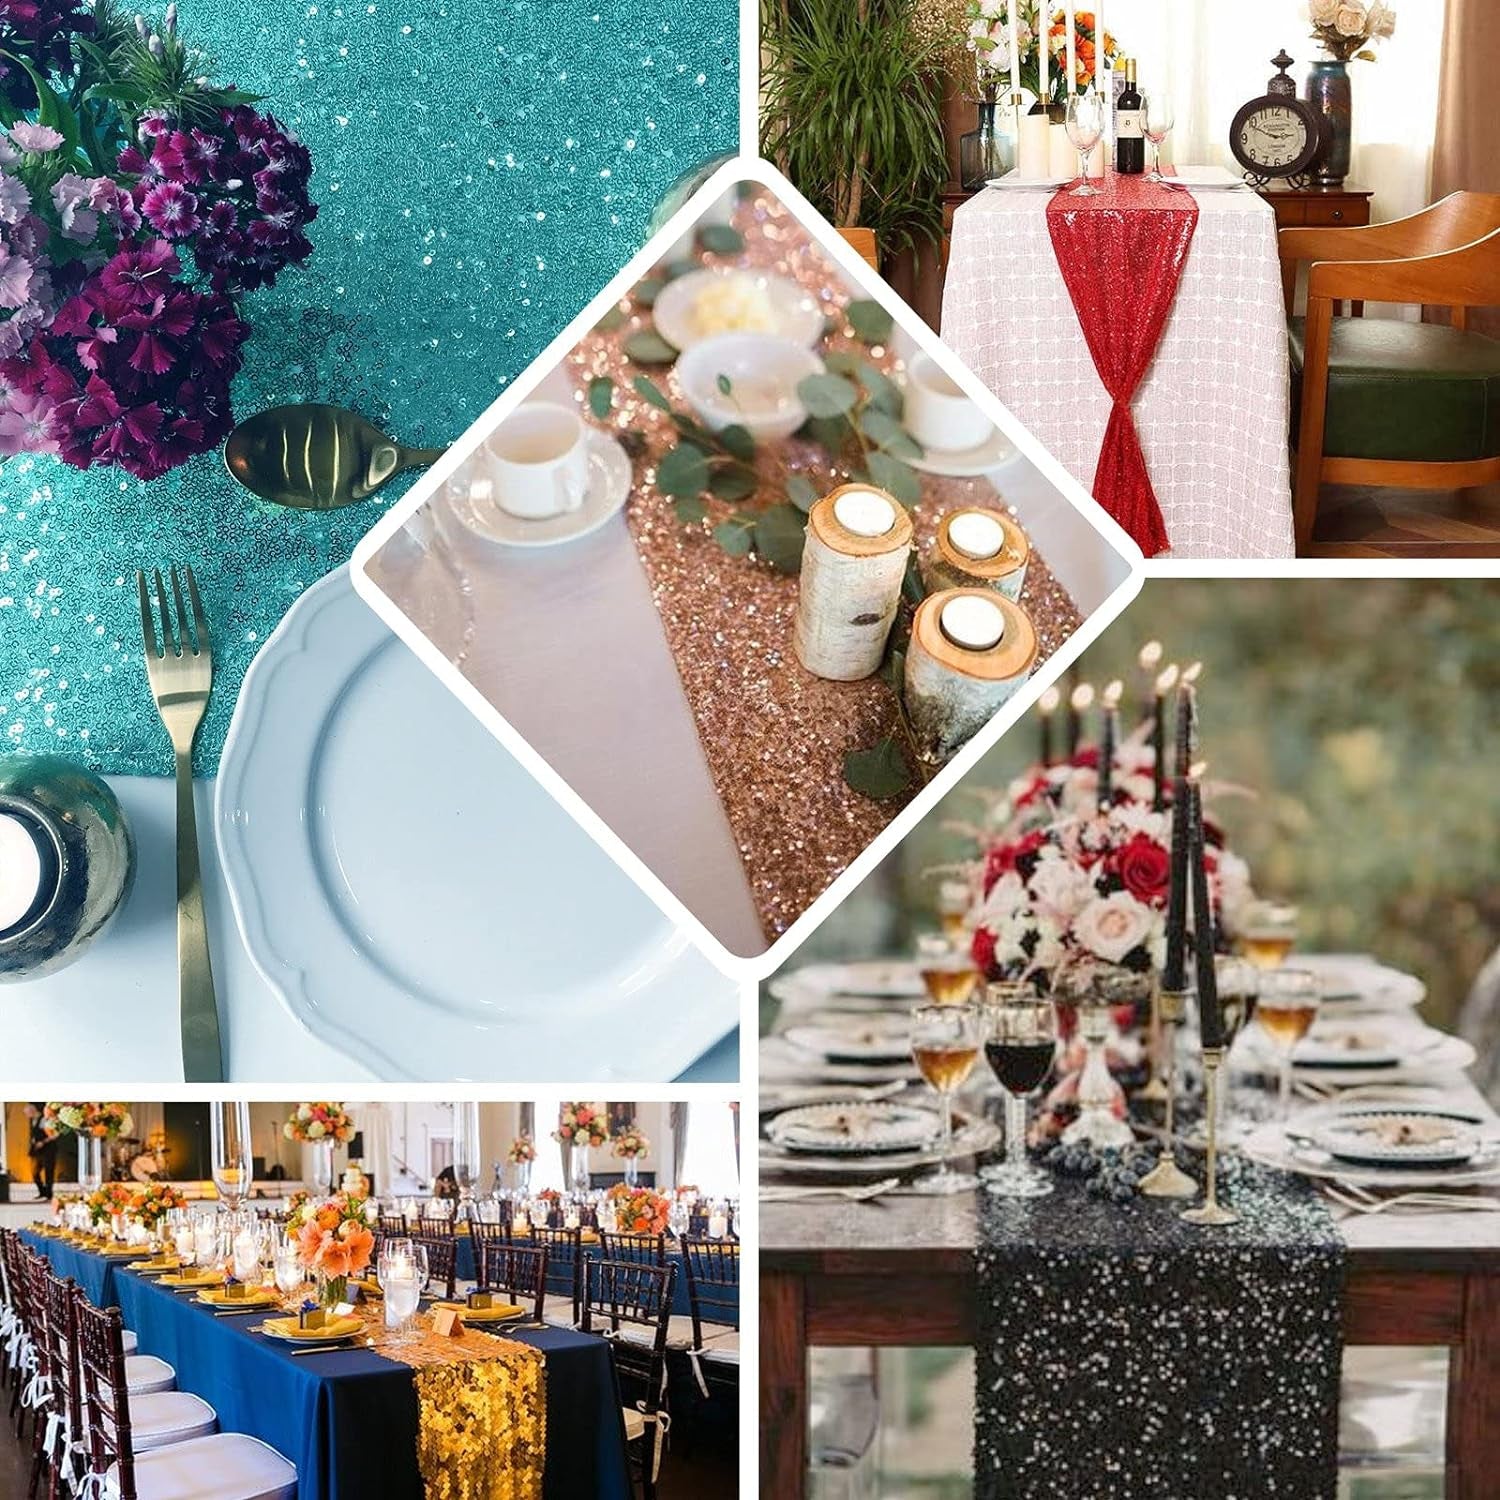 Sparkly Black Sequin Table Runner 12" x 72" - Glamorous Glitter Table Linens for Weddings & Birthday Party Decor